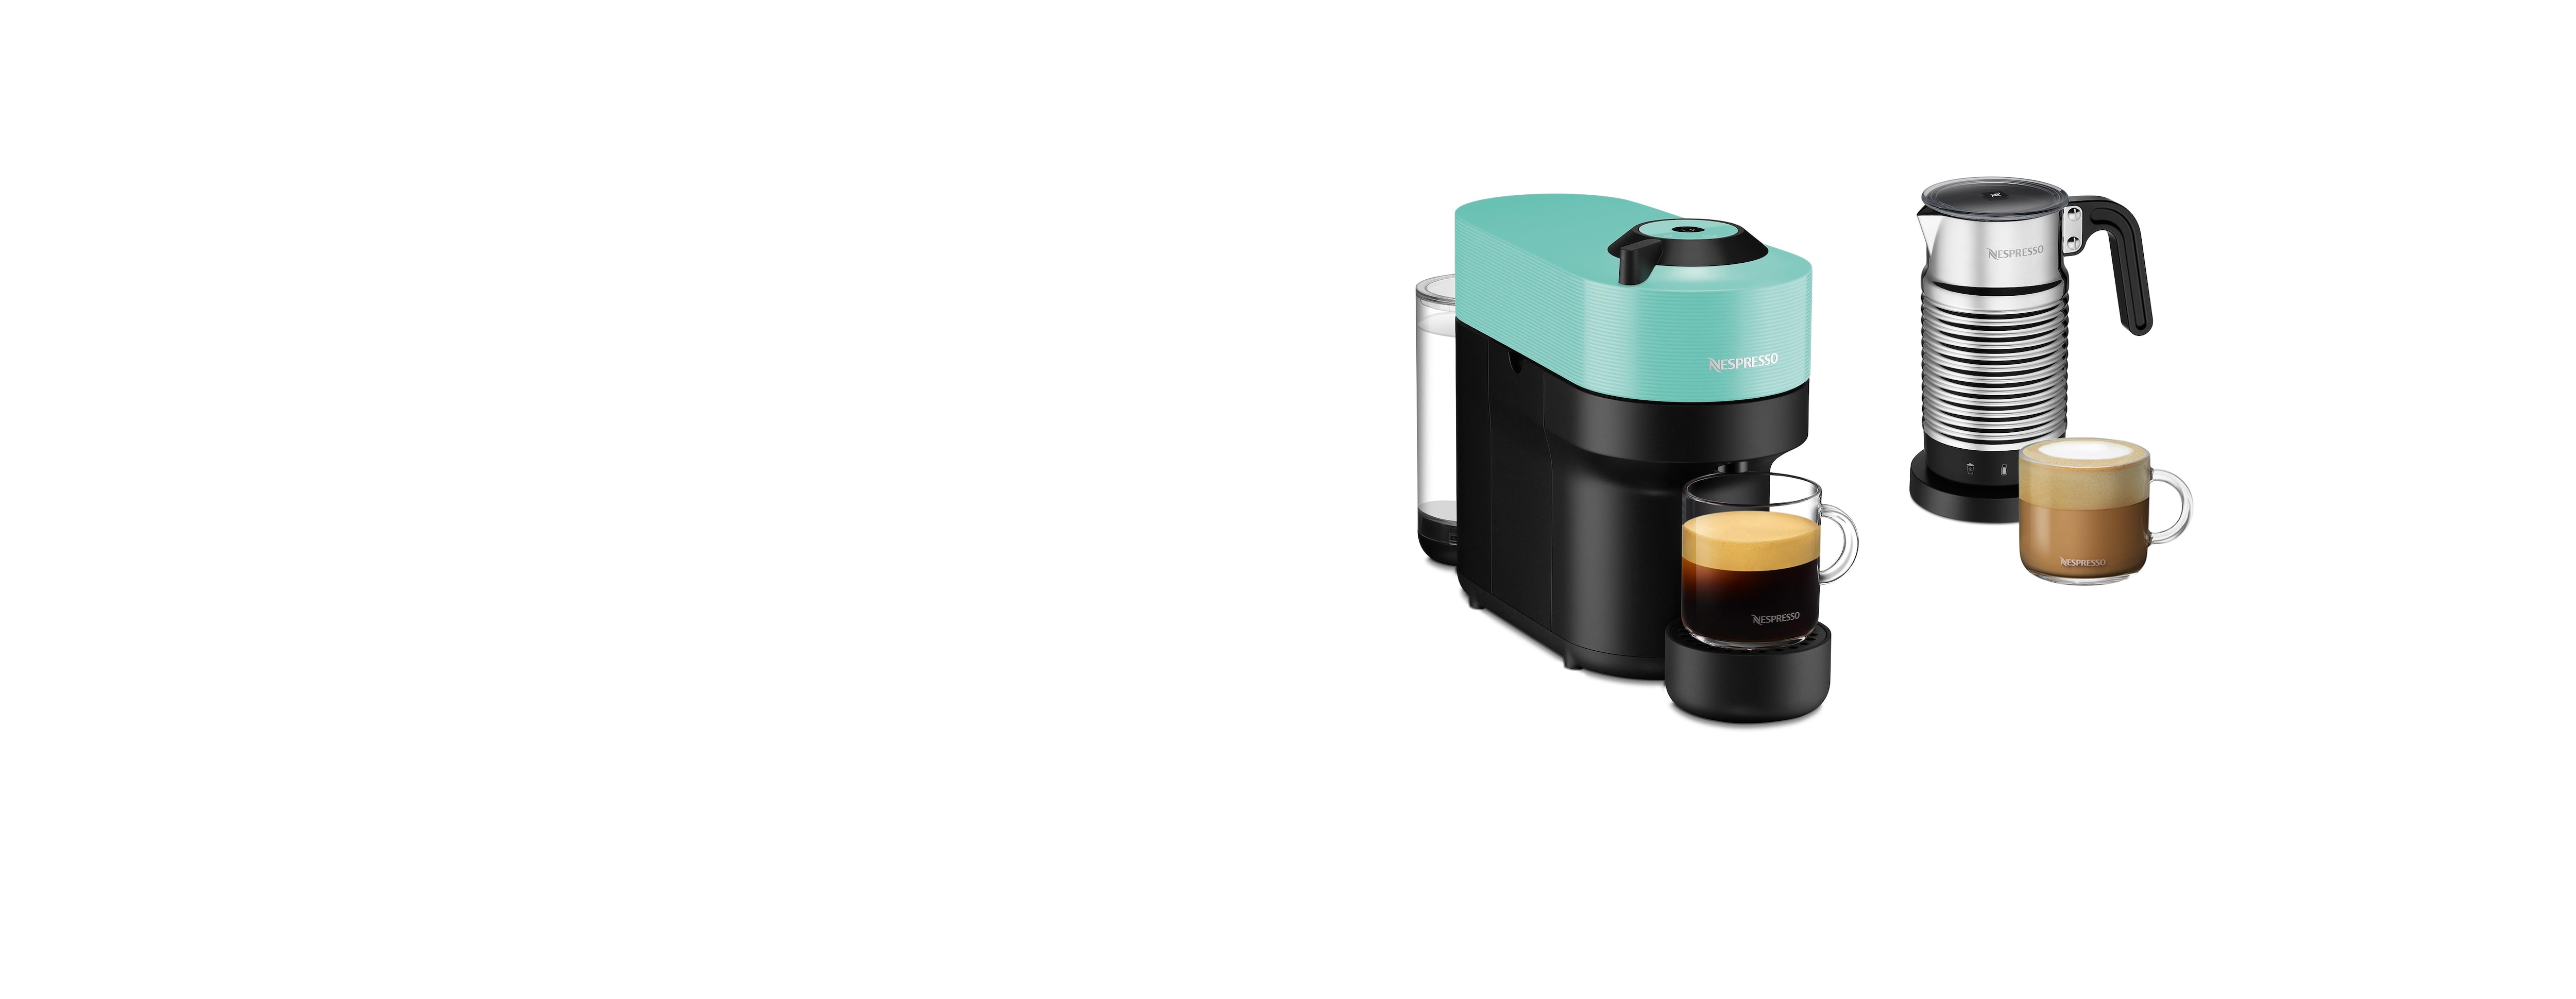 Vertuo Pop Aqua Mint Nespresso Coffee Machine & Aeroccino4 